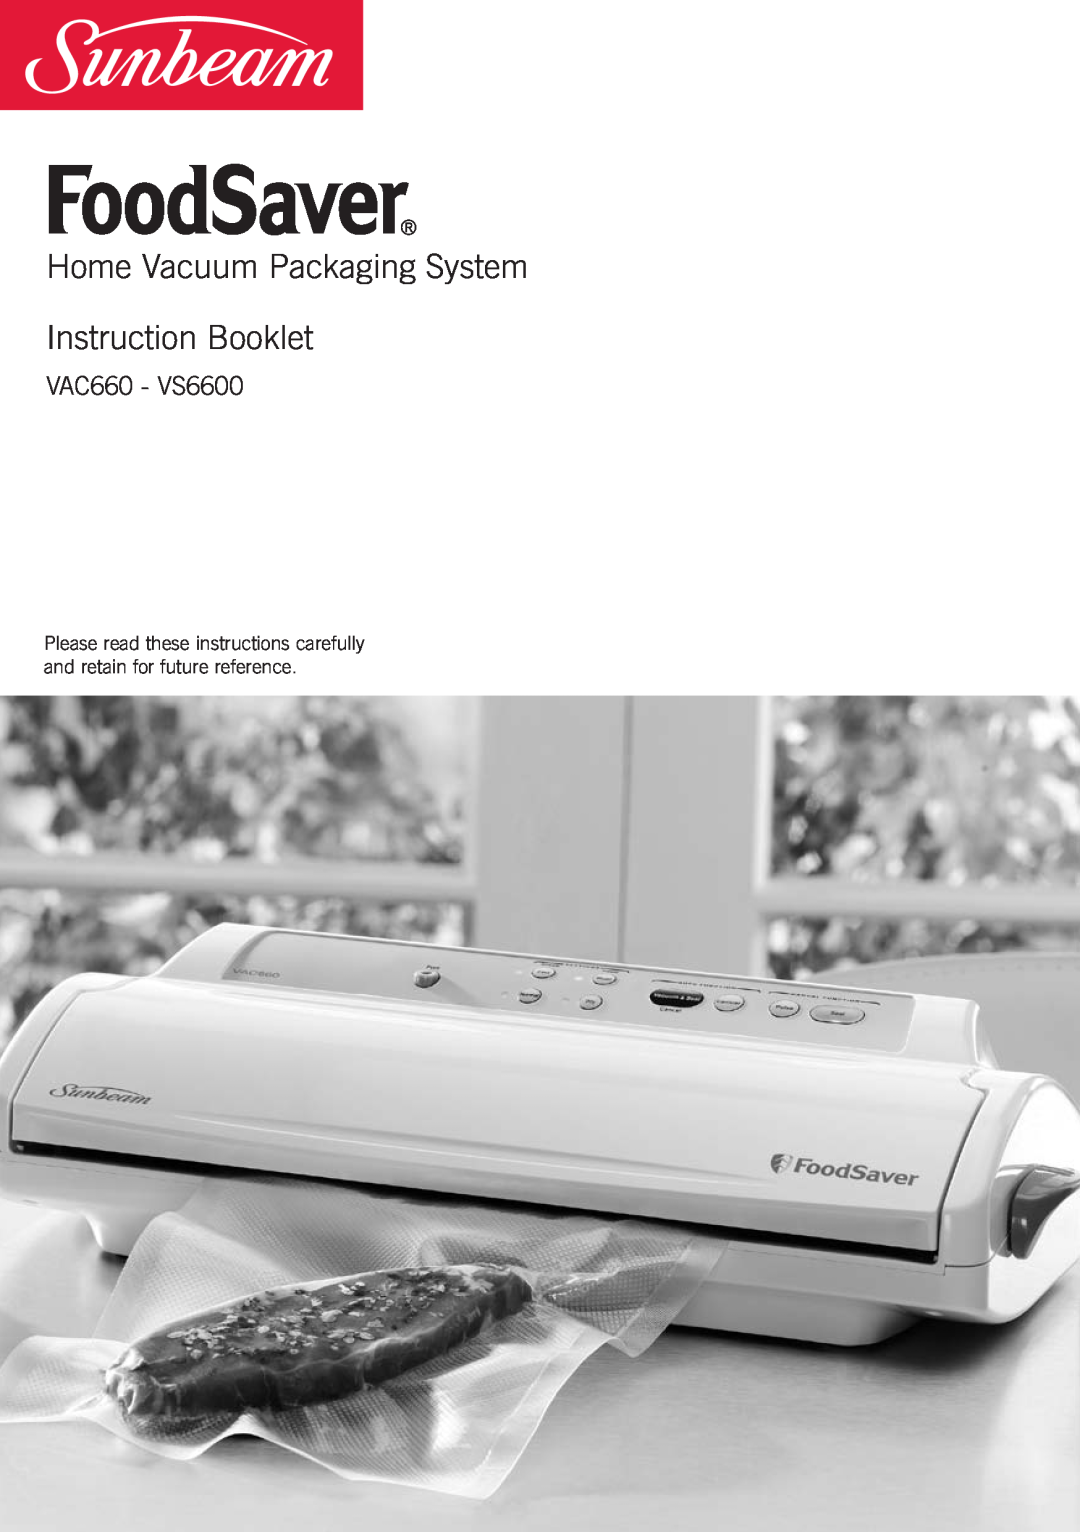 Sunbeam manual Home Vacuum Packaging System Instruction Booklet, VAC660 - VS6600 